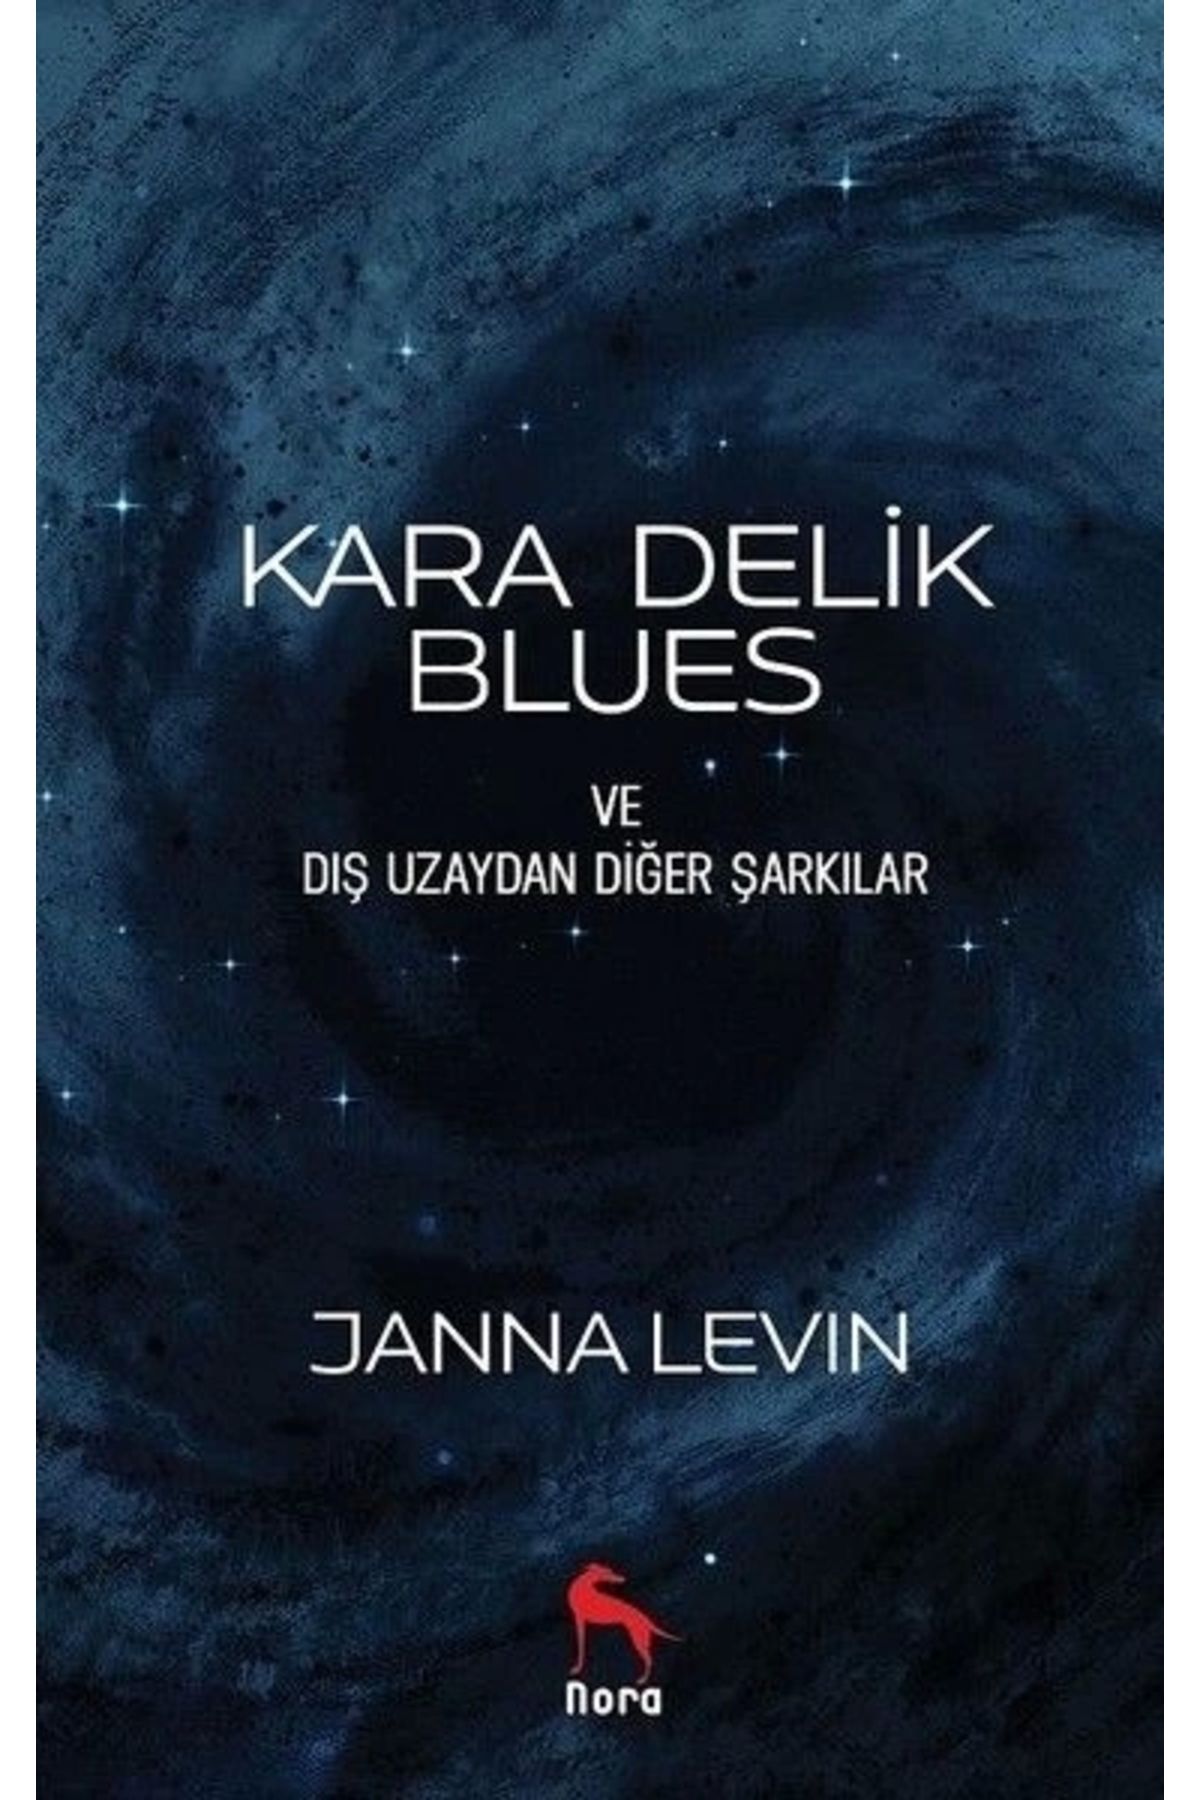 Nora Kitap Kara Delik Blues